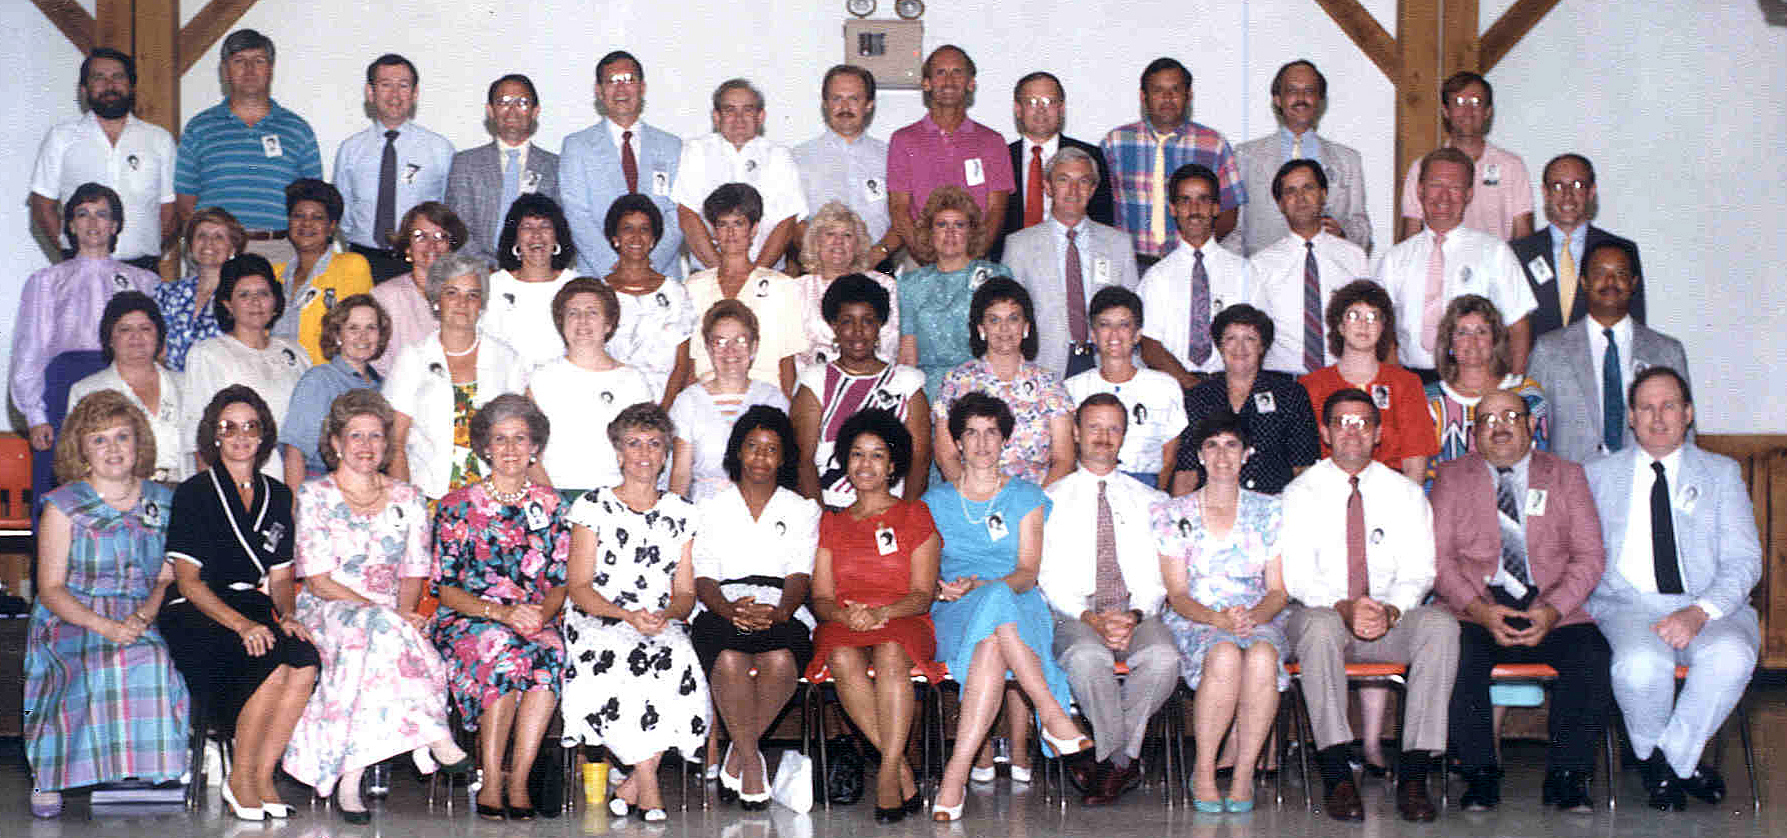 1989 Full Size Photograph